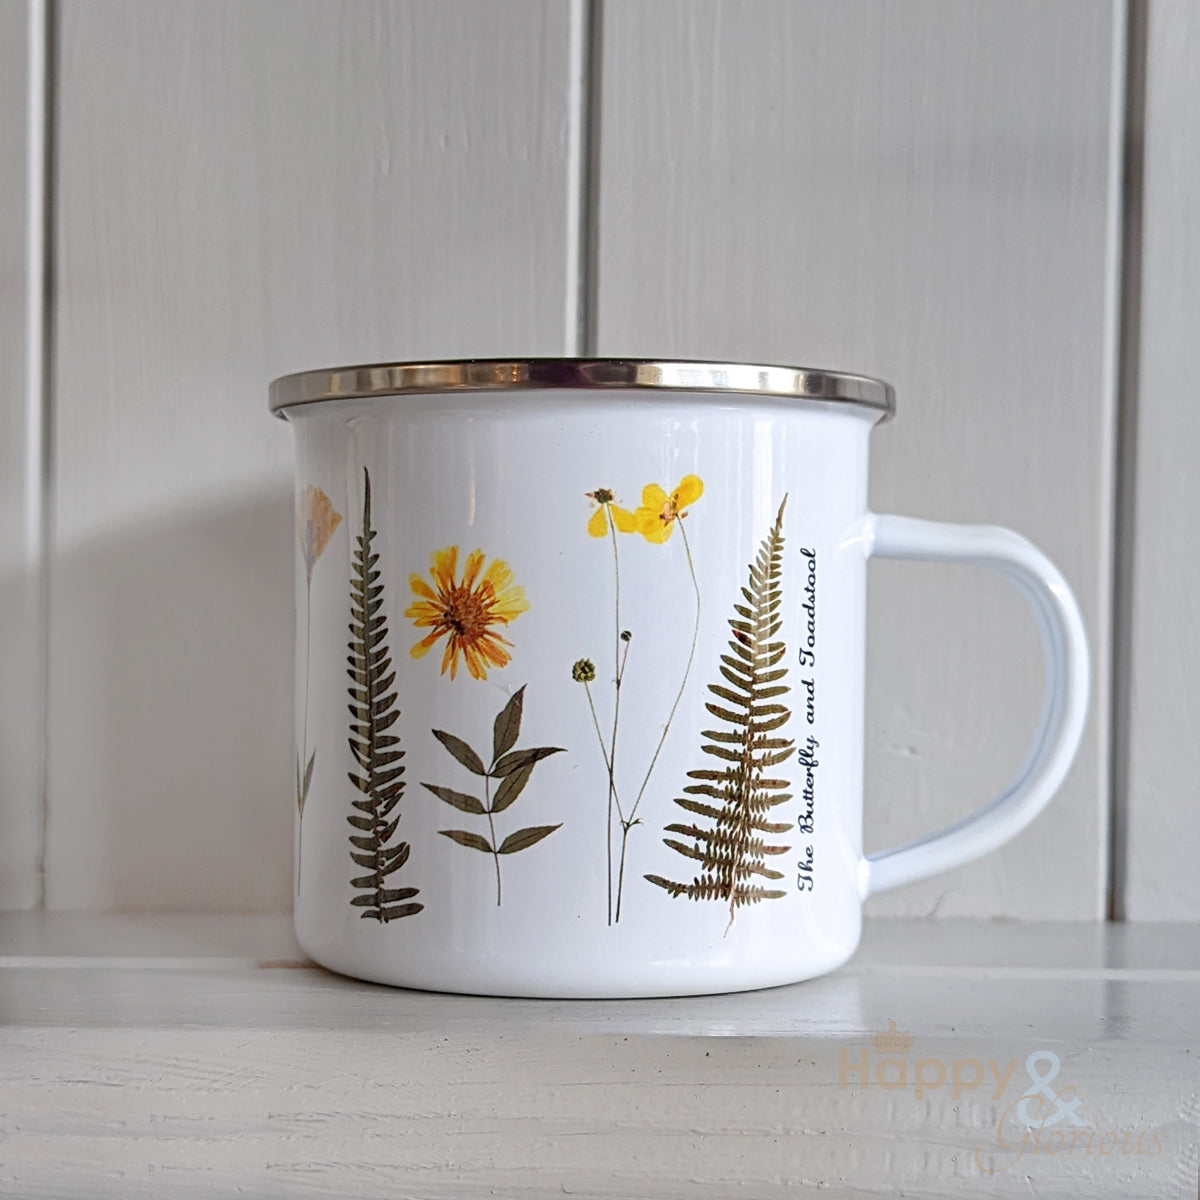 Pressed flower enamel camping mug